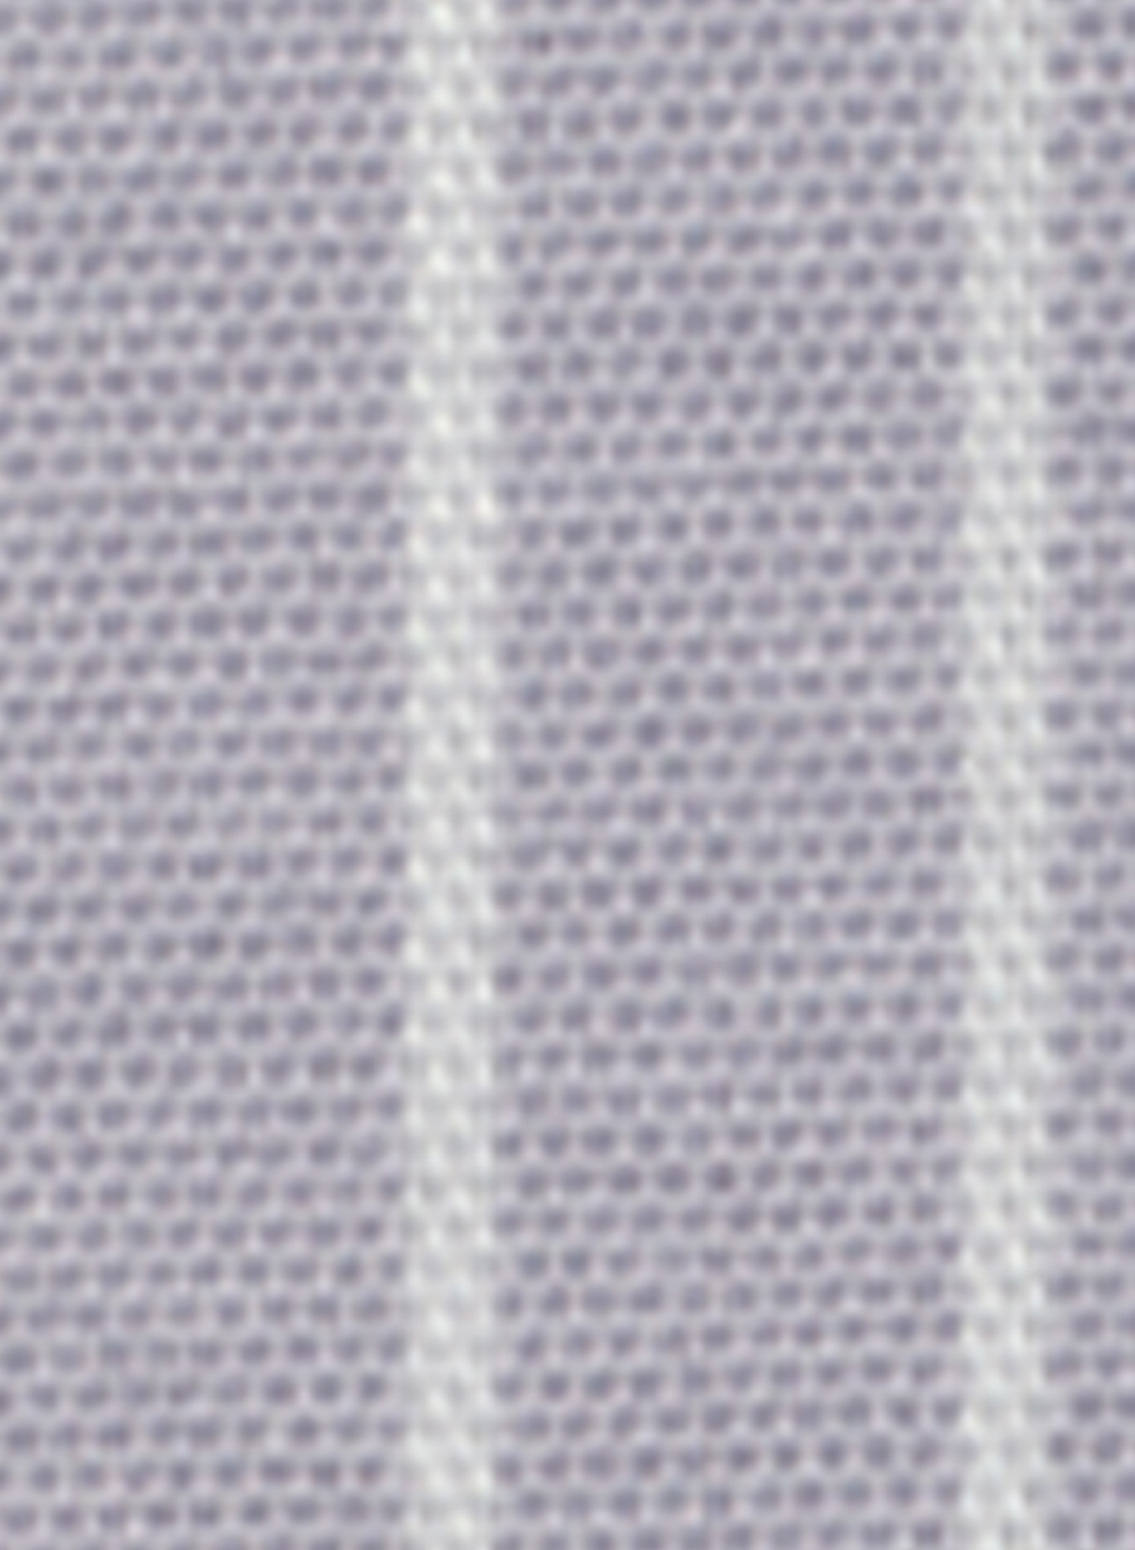 M8200Q Women's Ticking Stripe 3/4 Sleeve Shirt